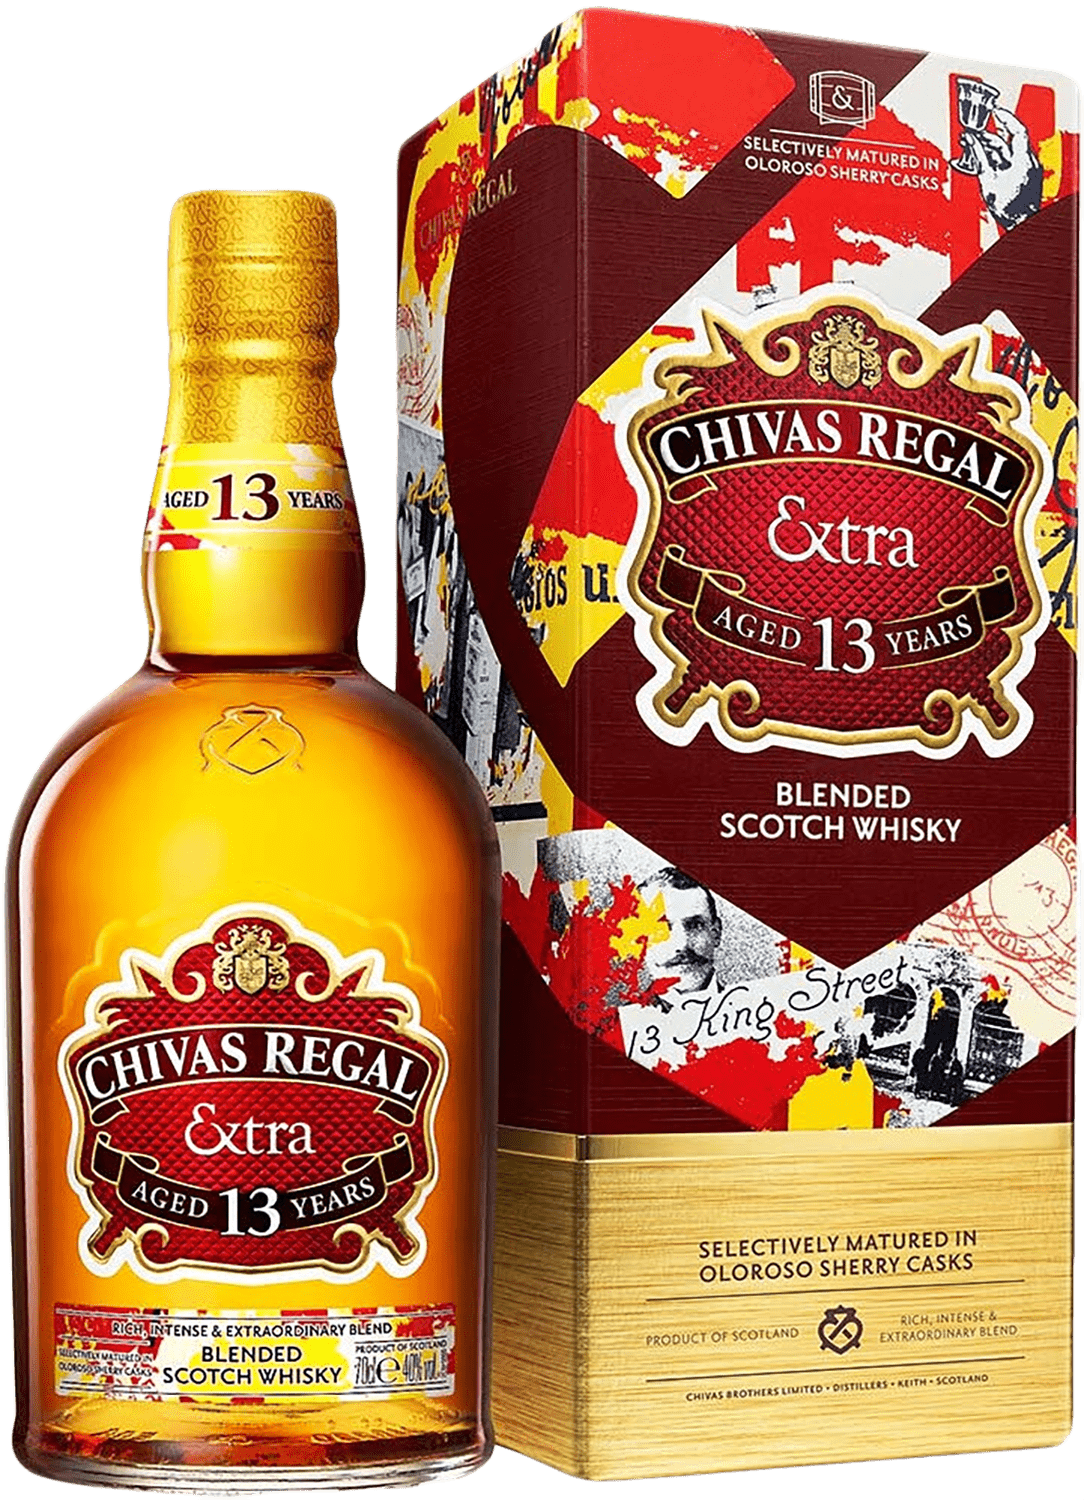 Chivas Regal Extra Oloroso Sherry Cask blended scotch whisky 13 y.o. (gift box) chivas regal extra oloroso sherry cask blended scotch whisky gift box